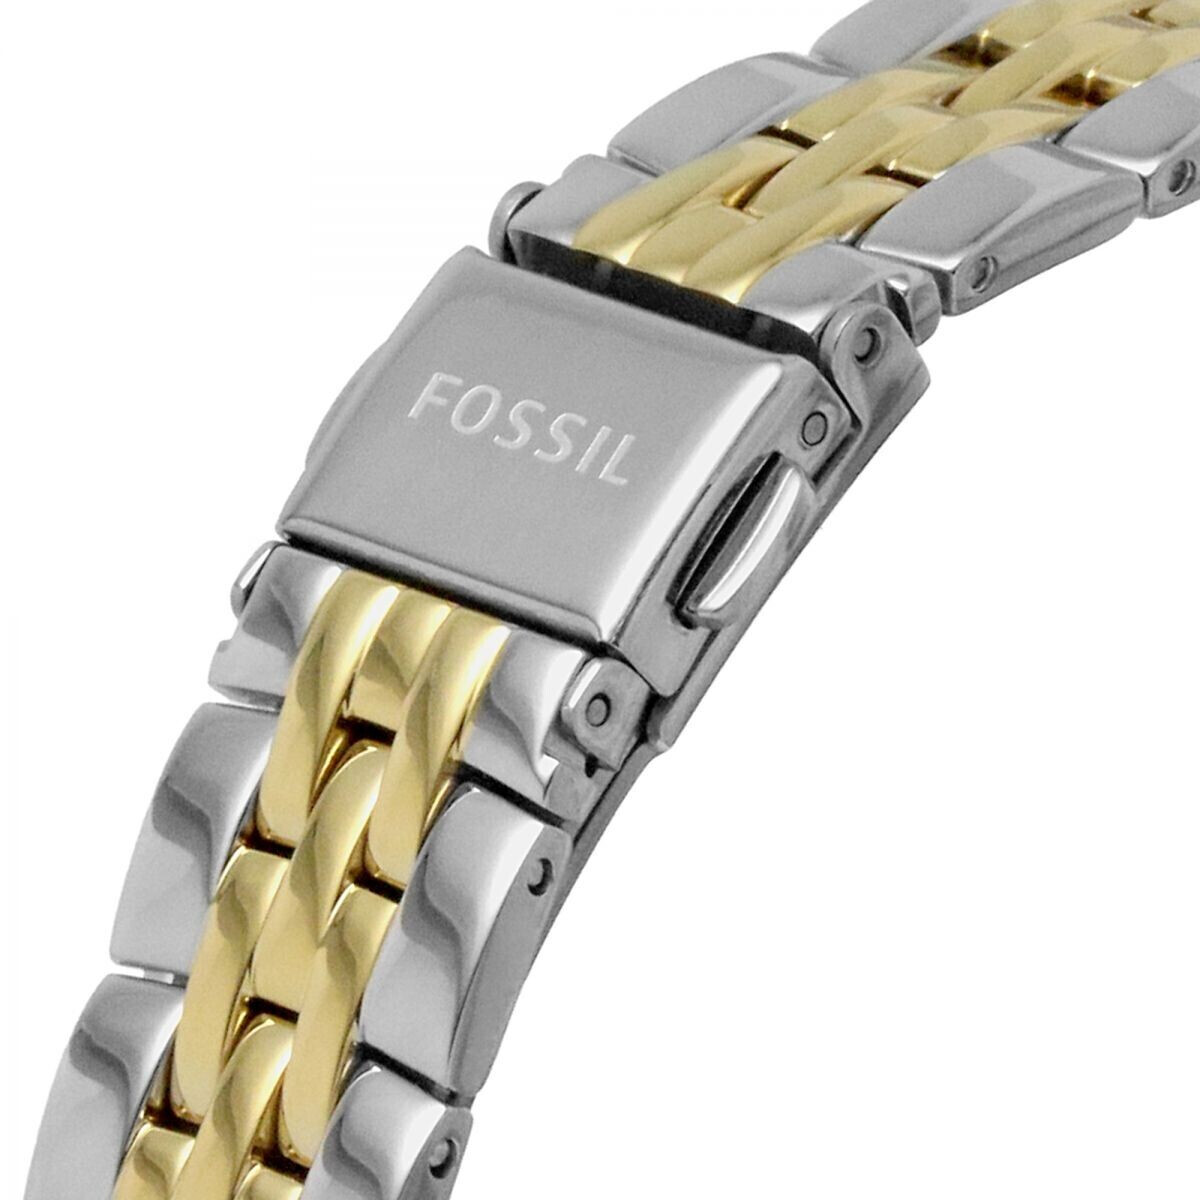 Fossil ES5166 silver/gold ab bei € Preisvergleich 120,83 